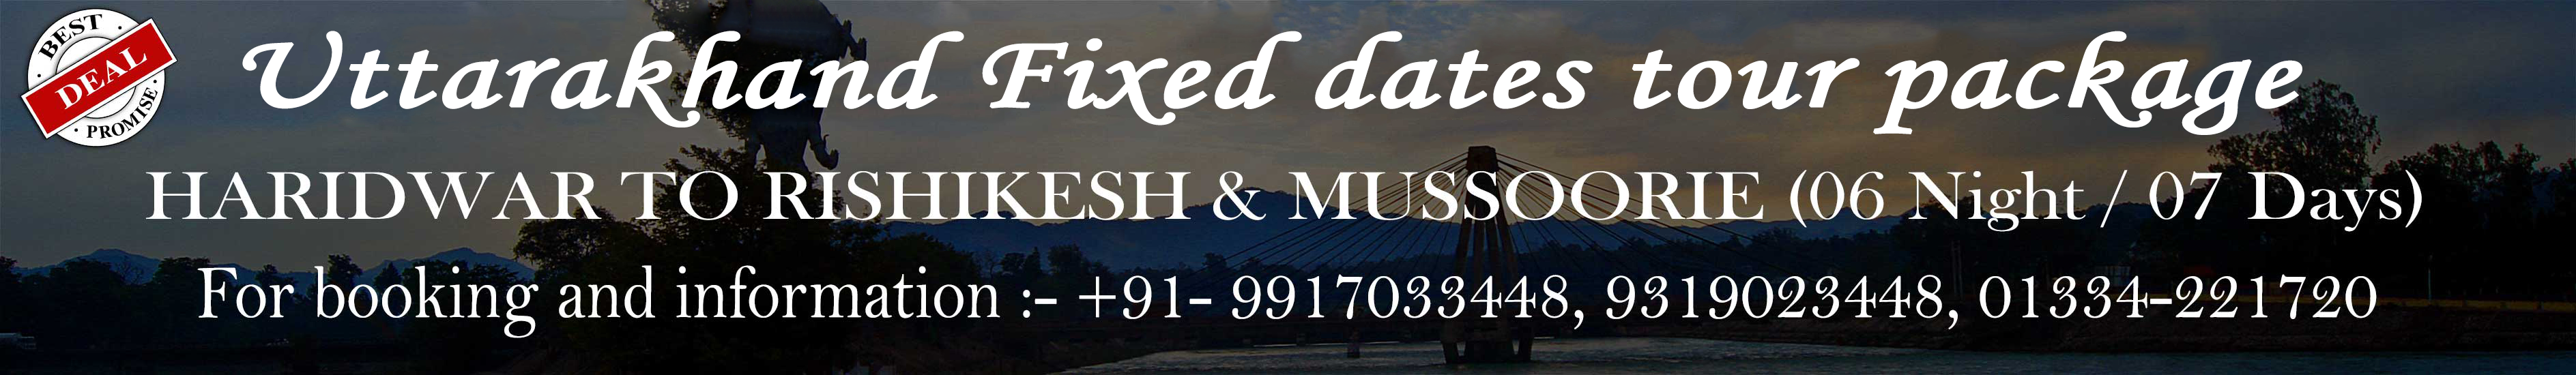 Uttarakhand Fixed dates tour package